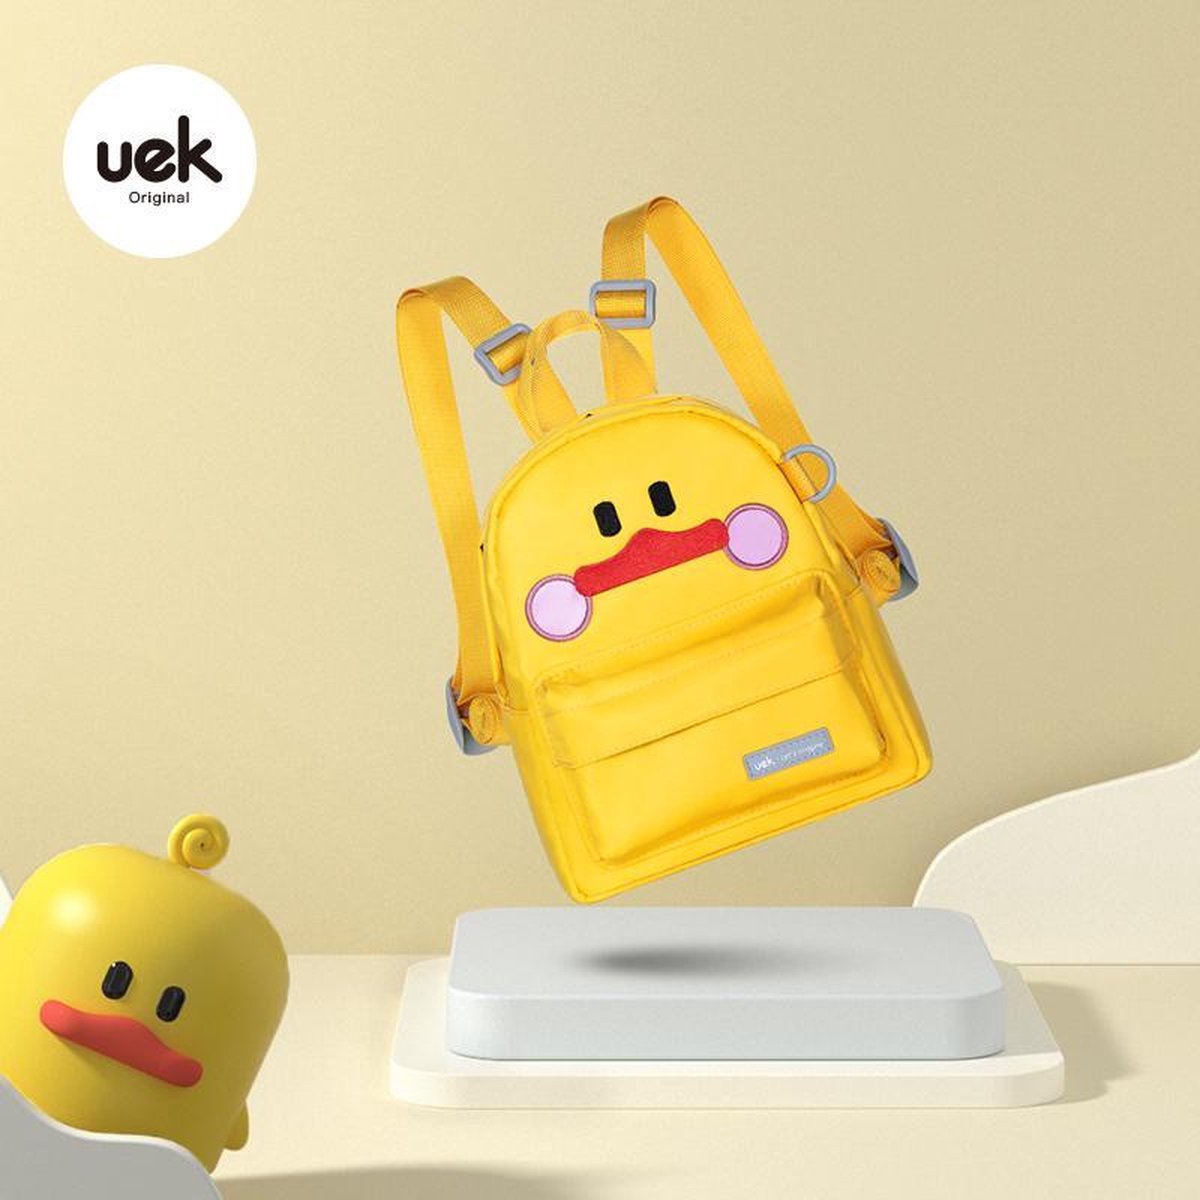 Uek original - rugzak XS - Yolk Duck Yellow geel incl stickers